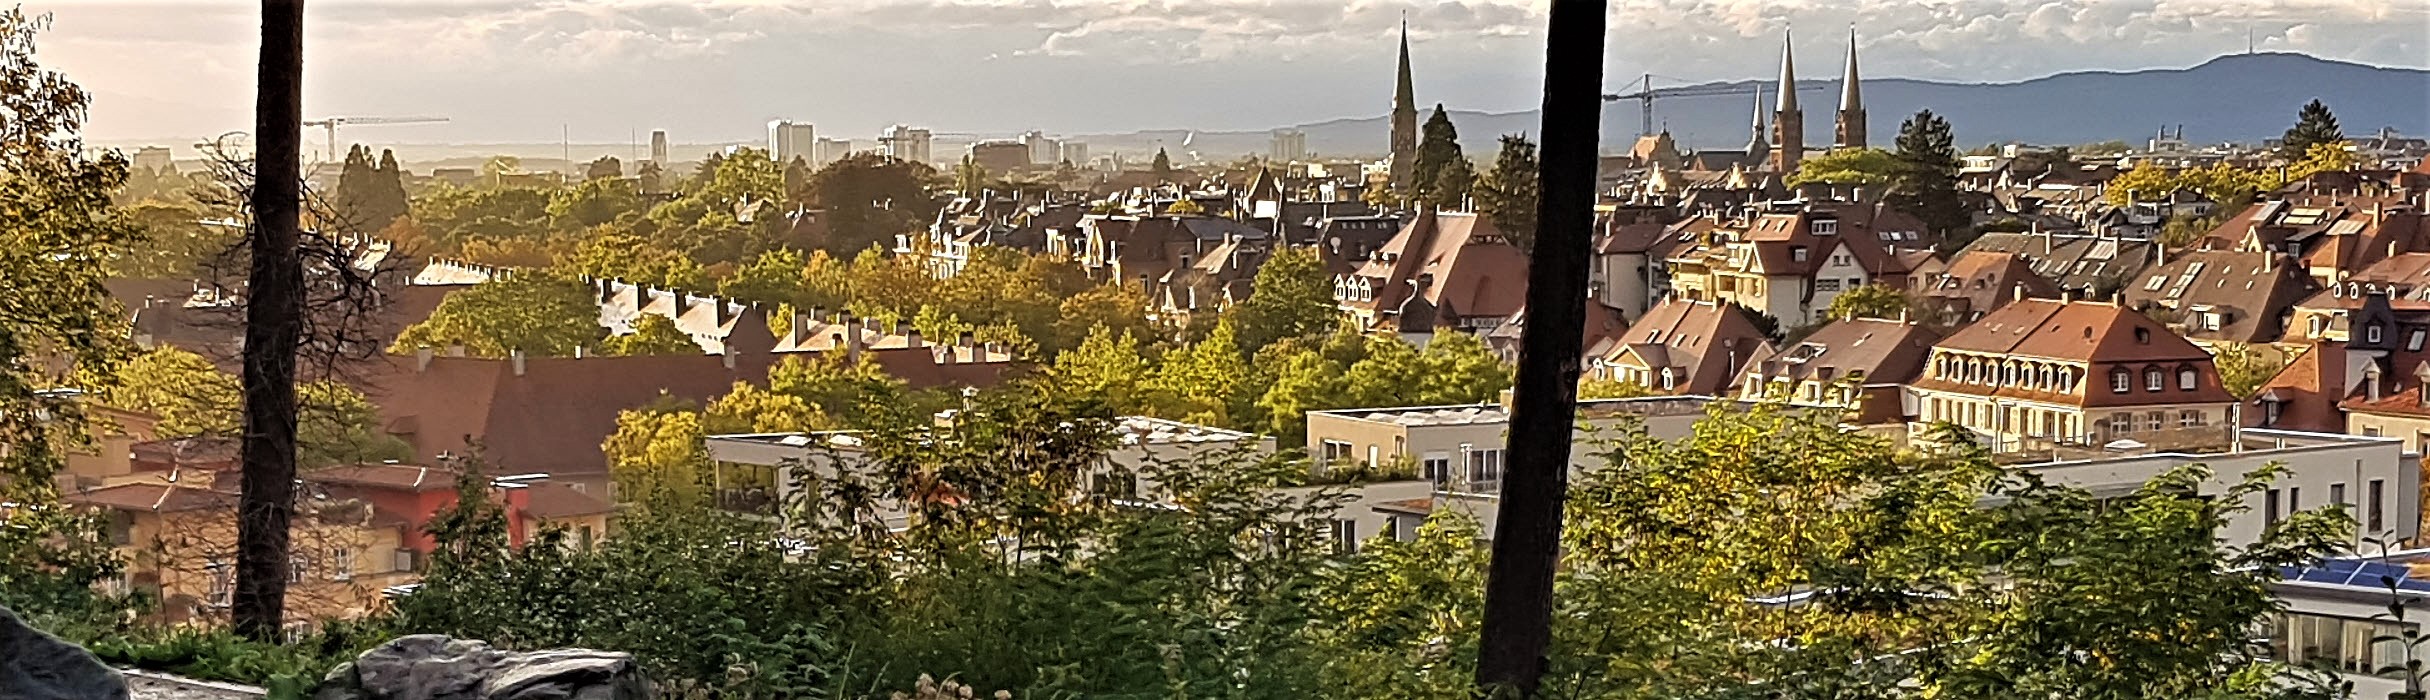 Panorama von Freiburg